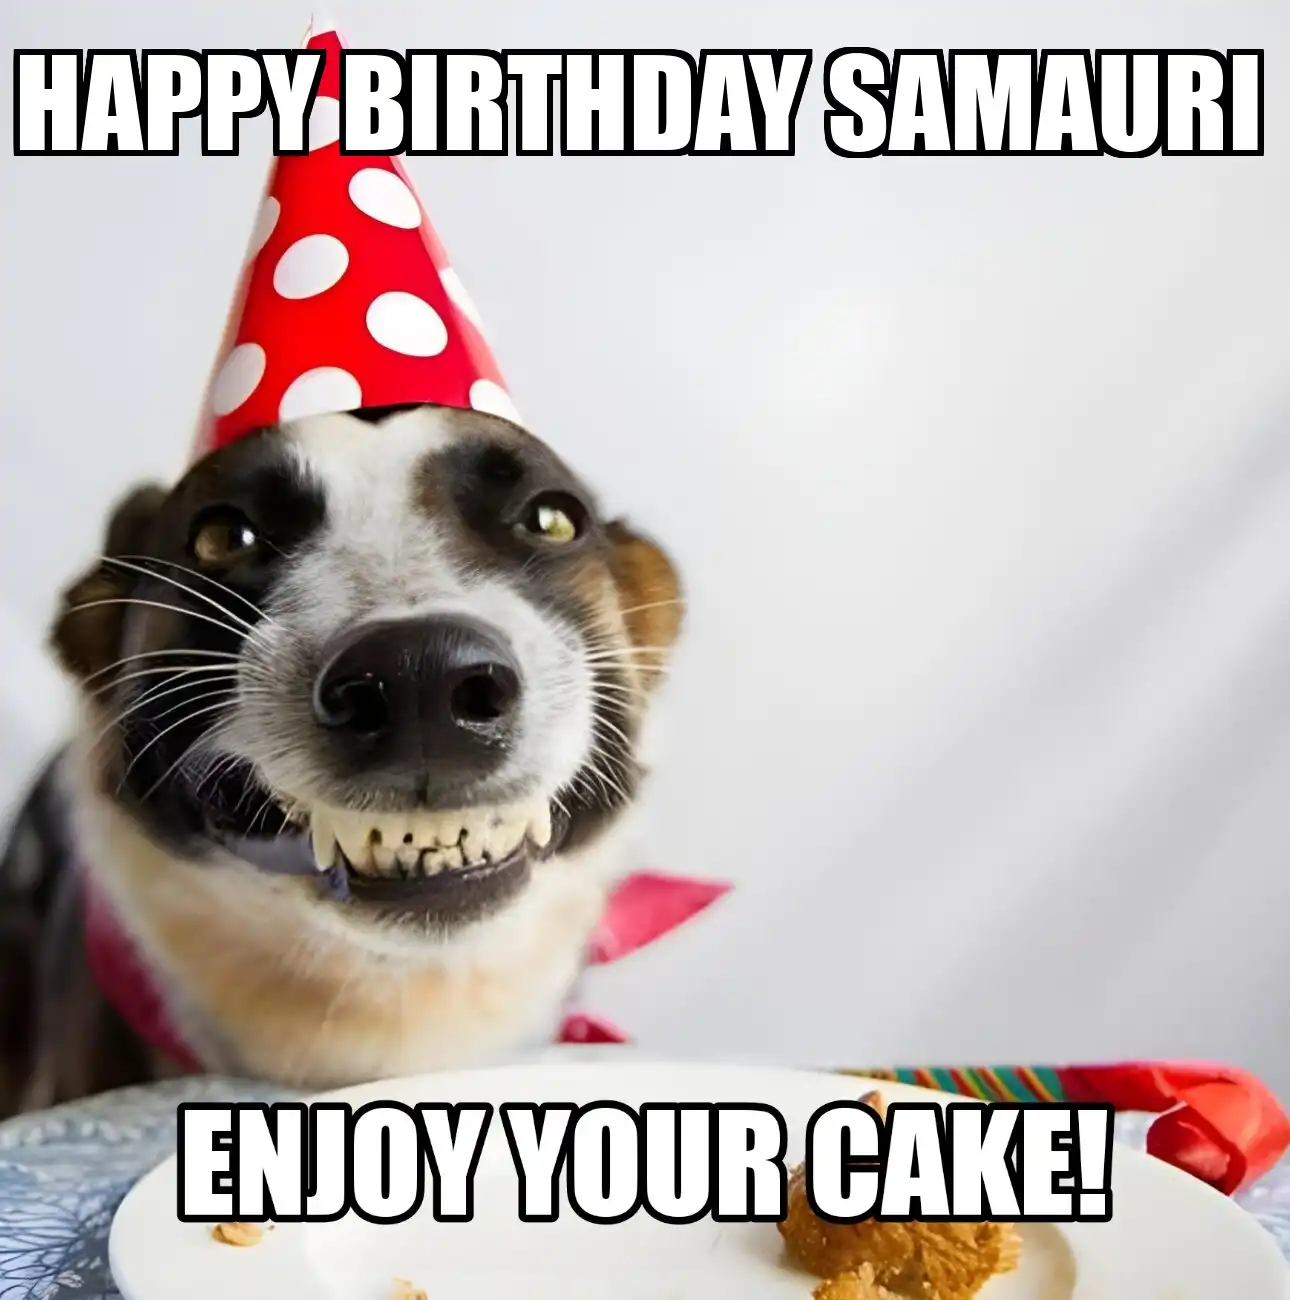 Happy Birthday Samauri Enjoy Your Cake Dog Meme